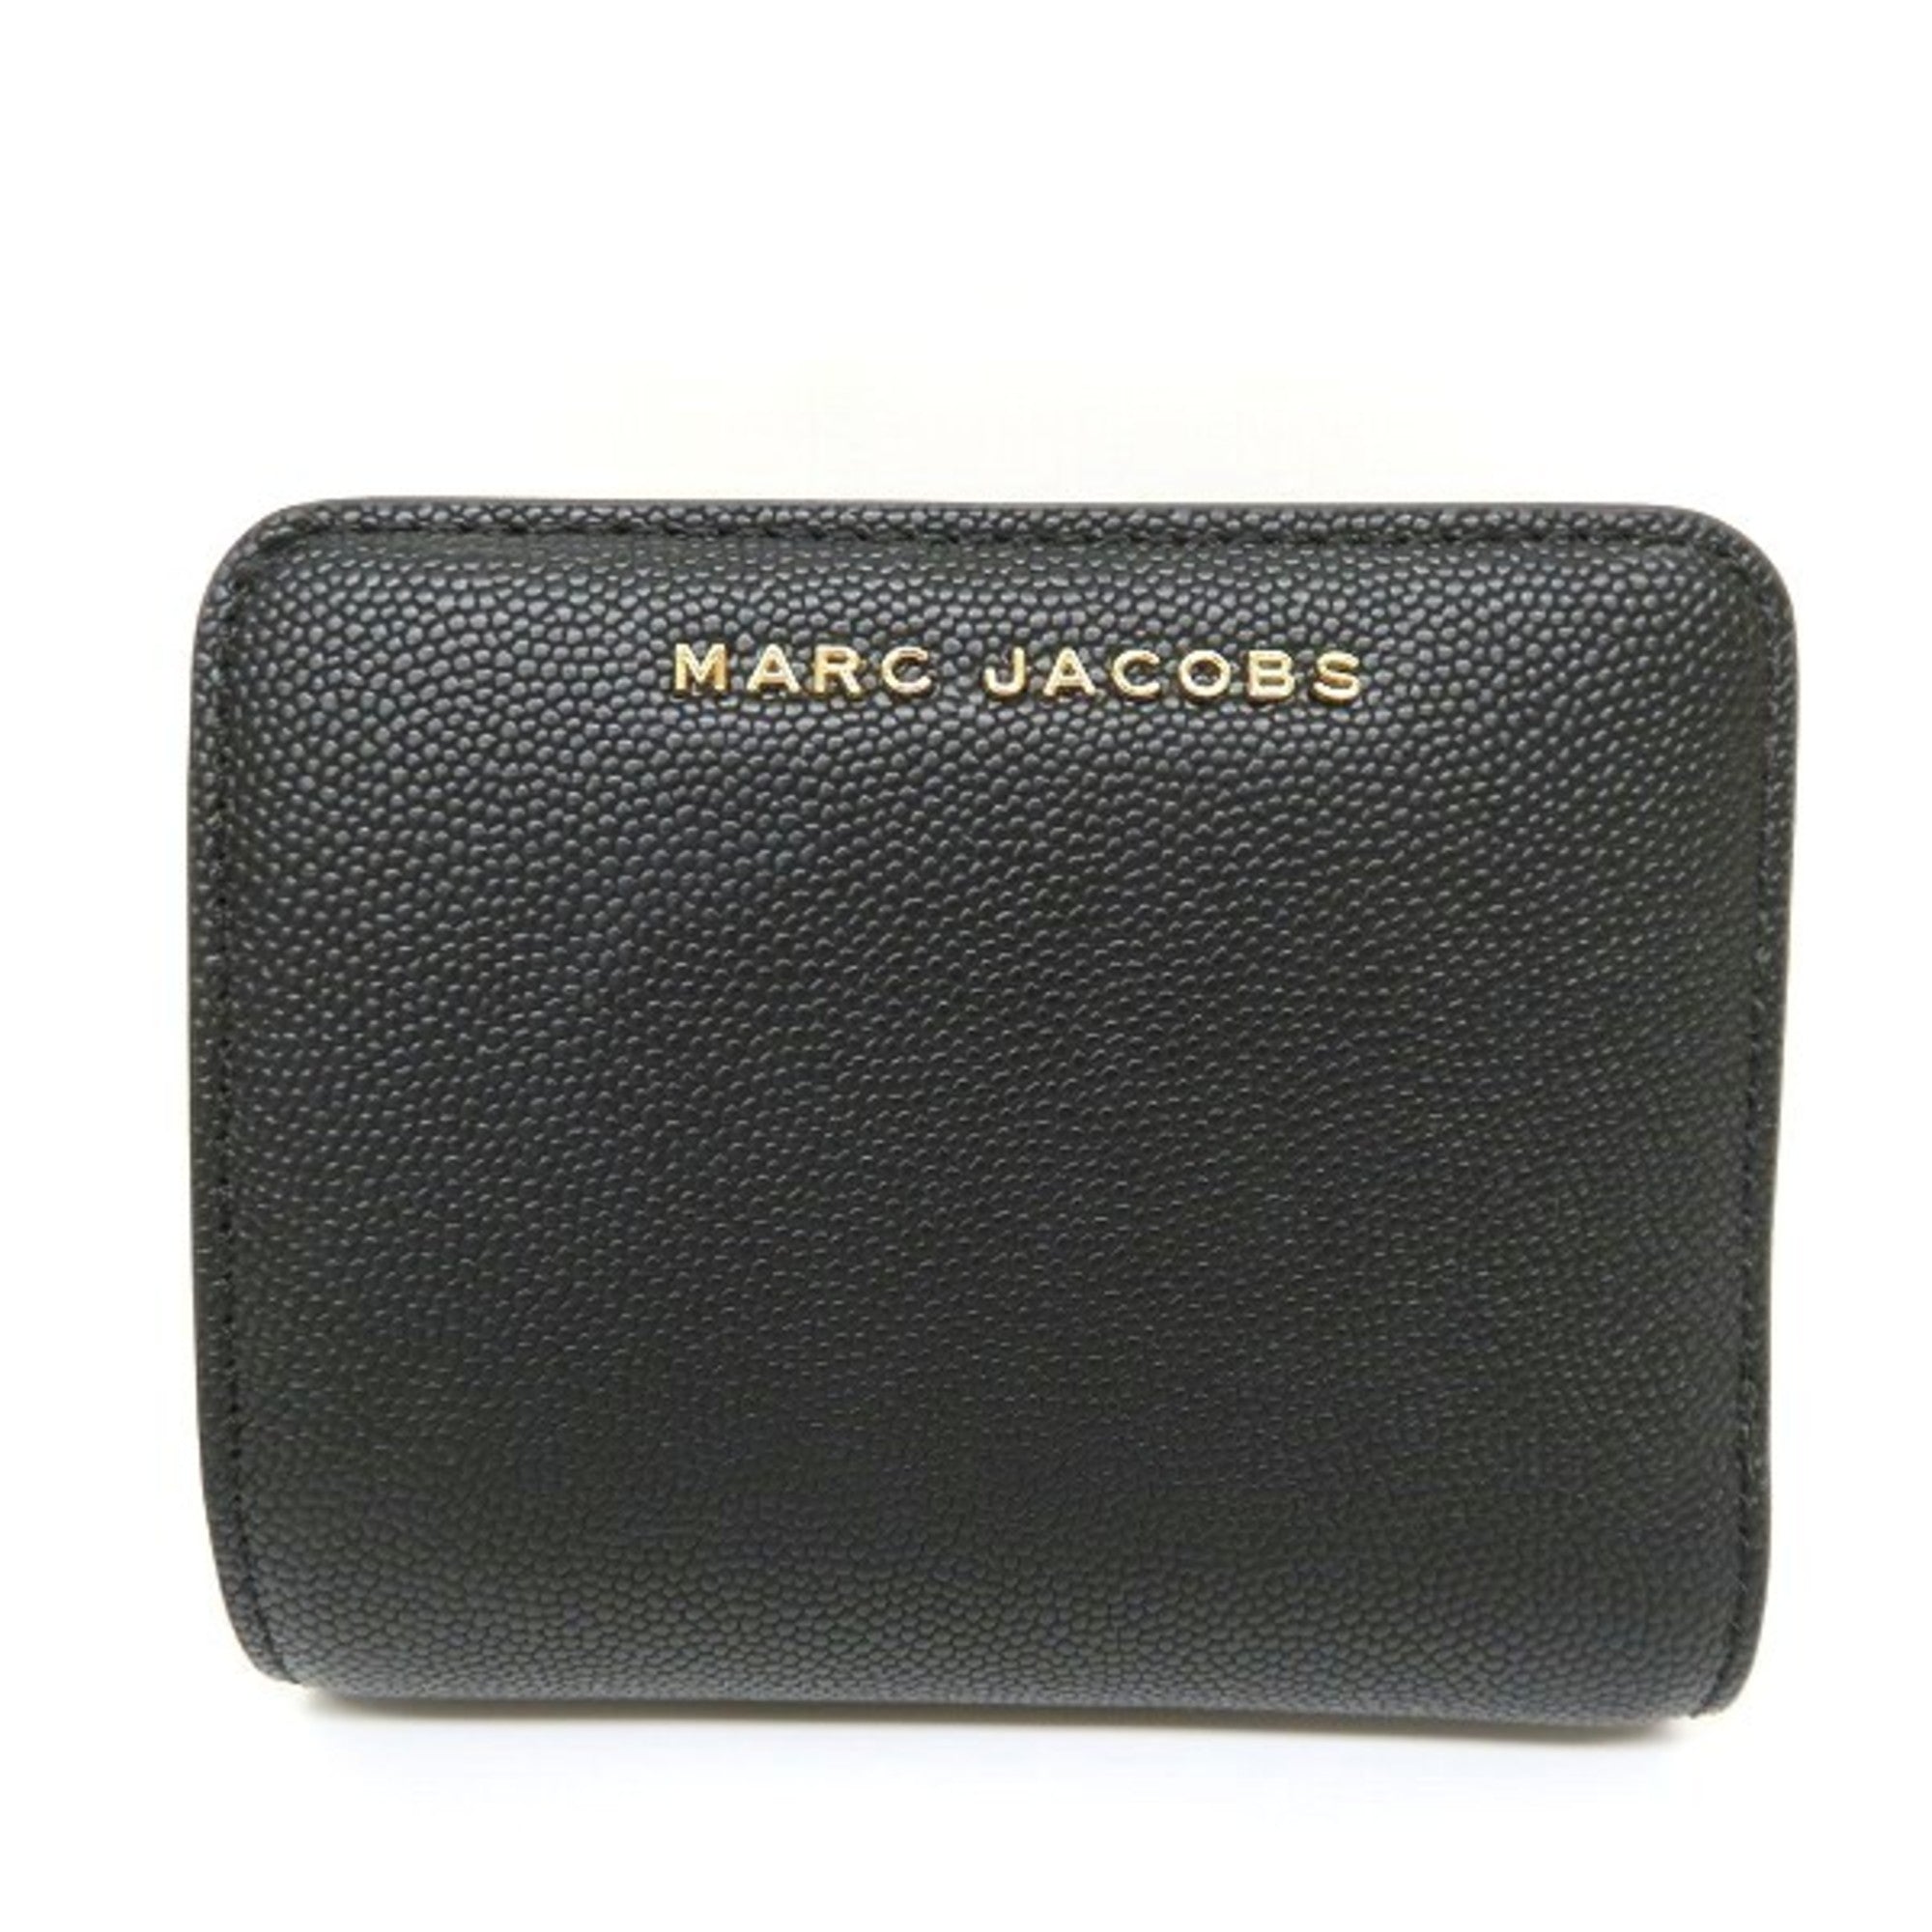 marc jacobs m0016993 black wallet bifold ladies